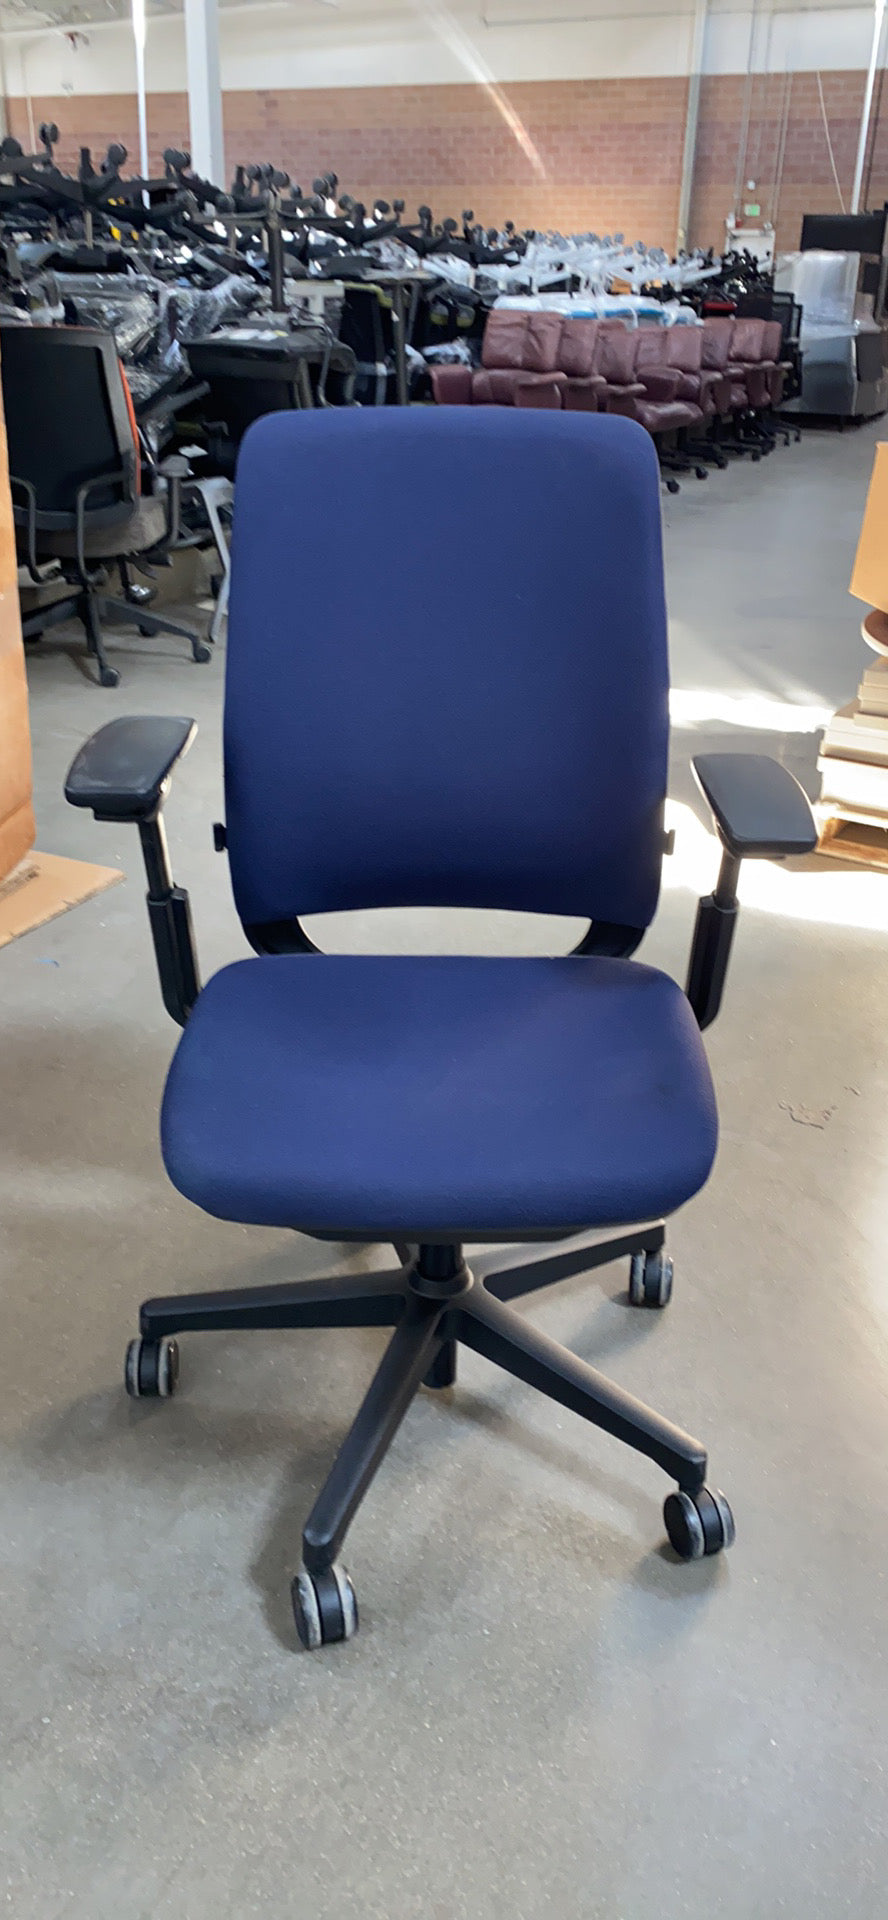 Steelcase Amia chair in dark blue